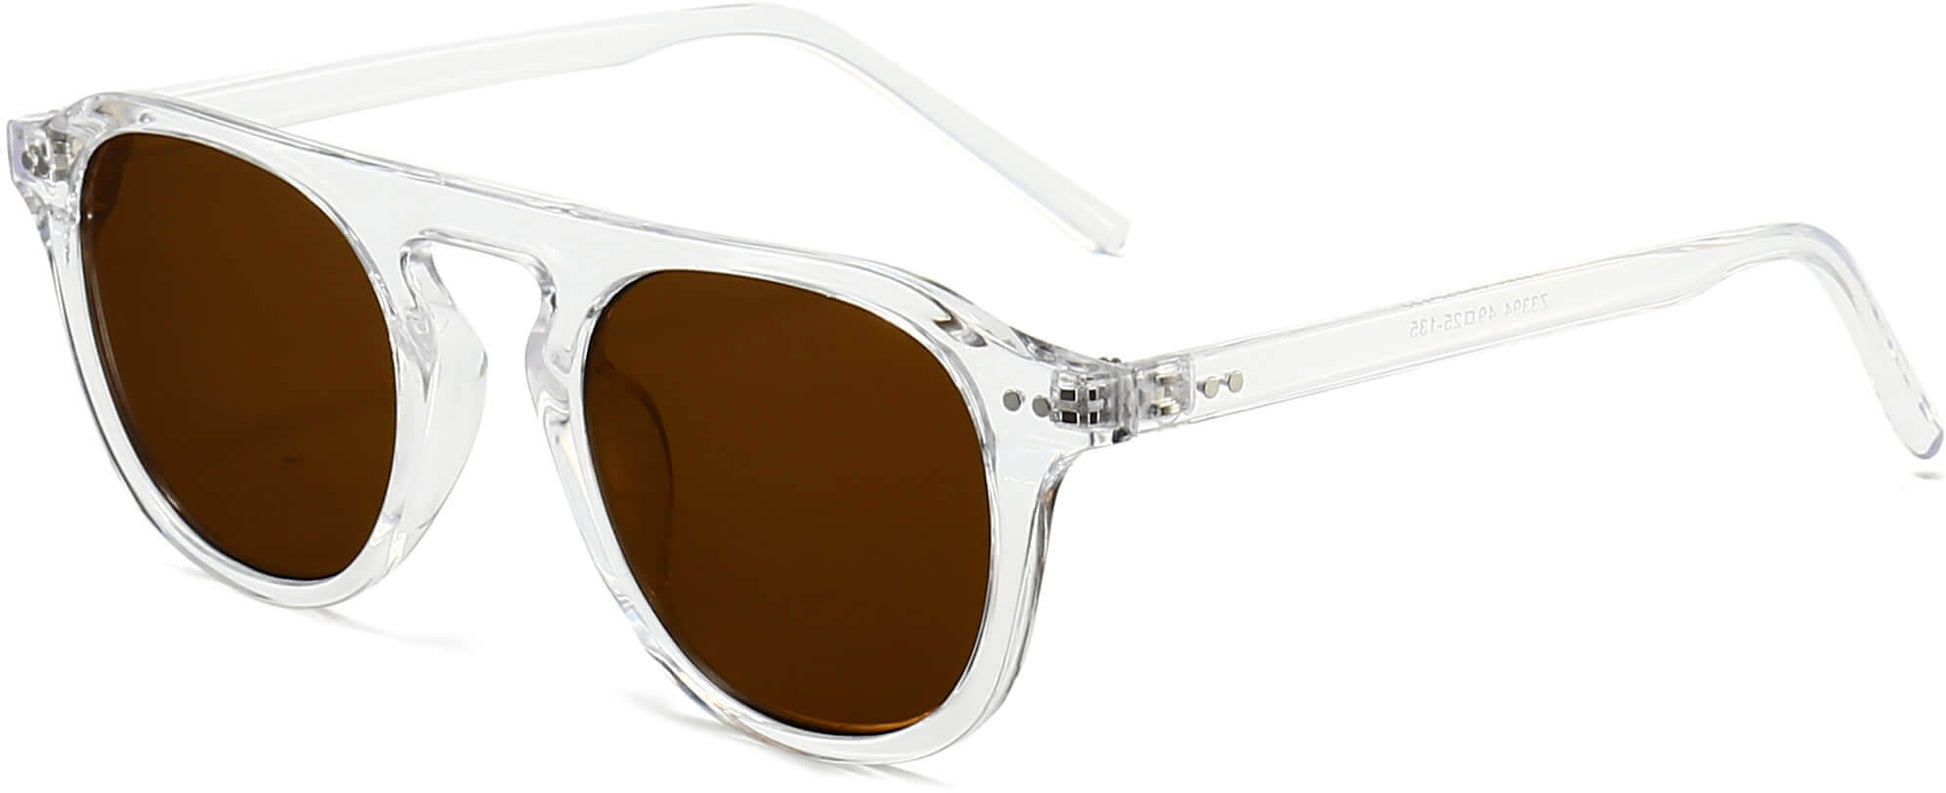 Ezekiel Clear Plastic Sunglasses from ANRRI, angle view